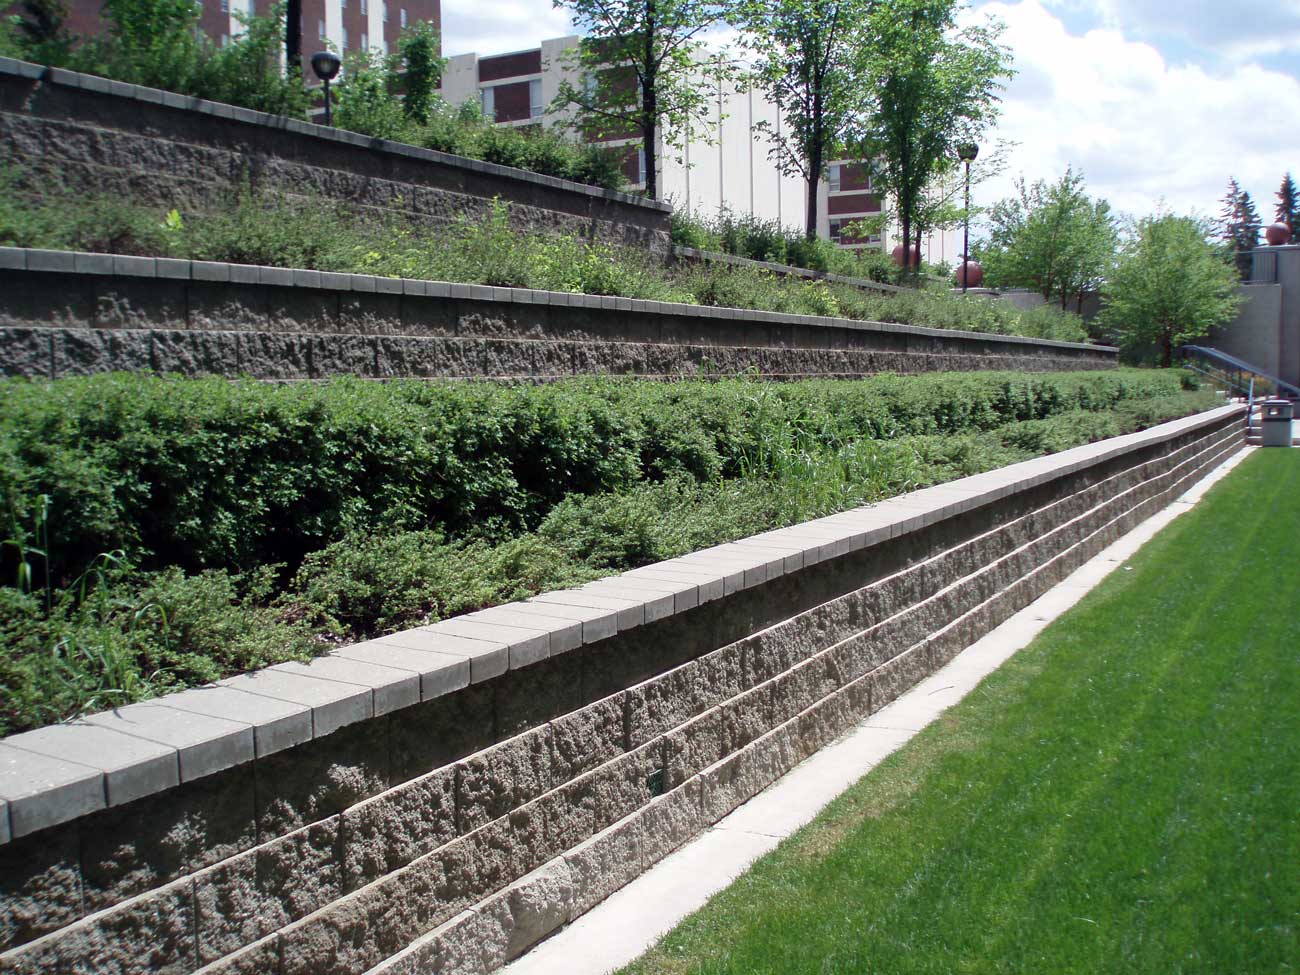 CornerStone 100 terraced retaining walls at SAIT College.